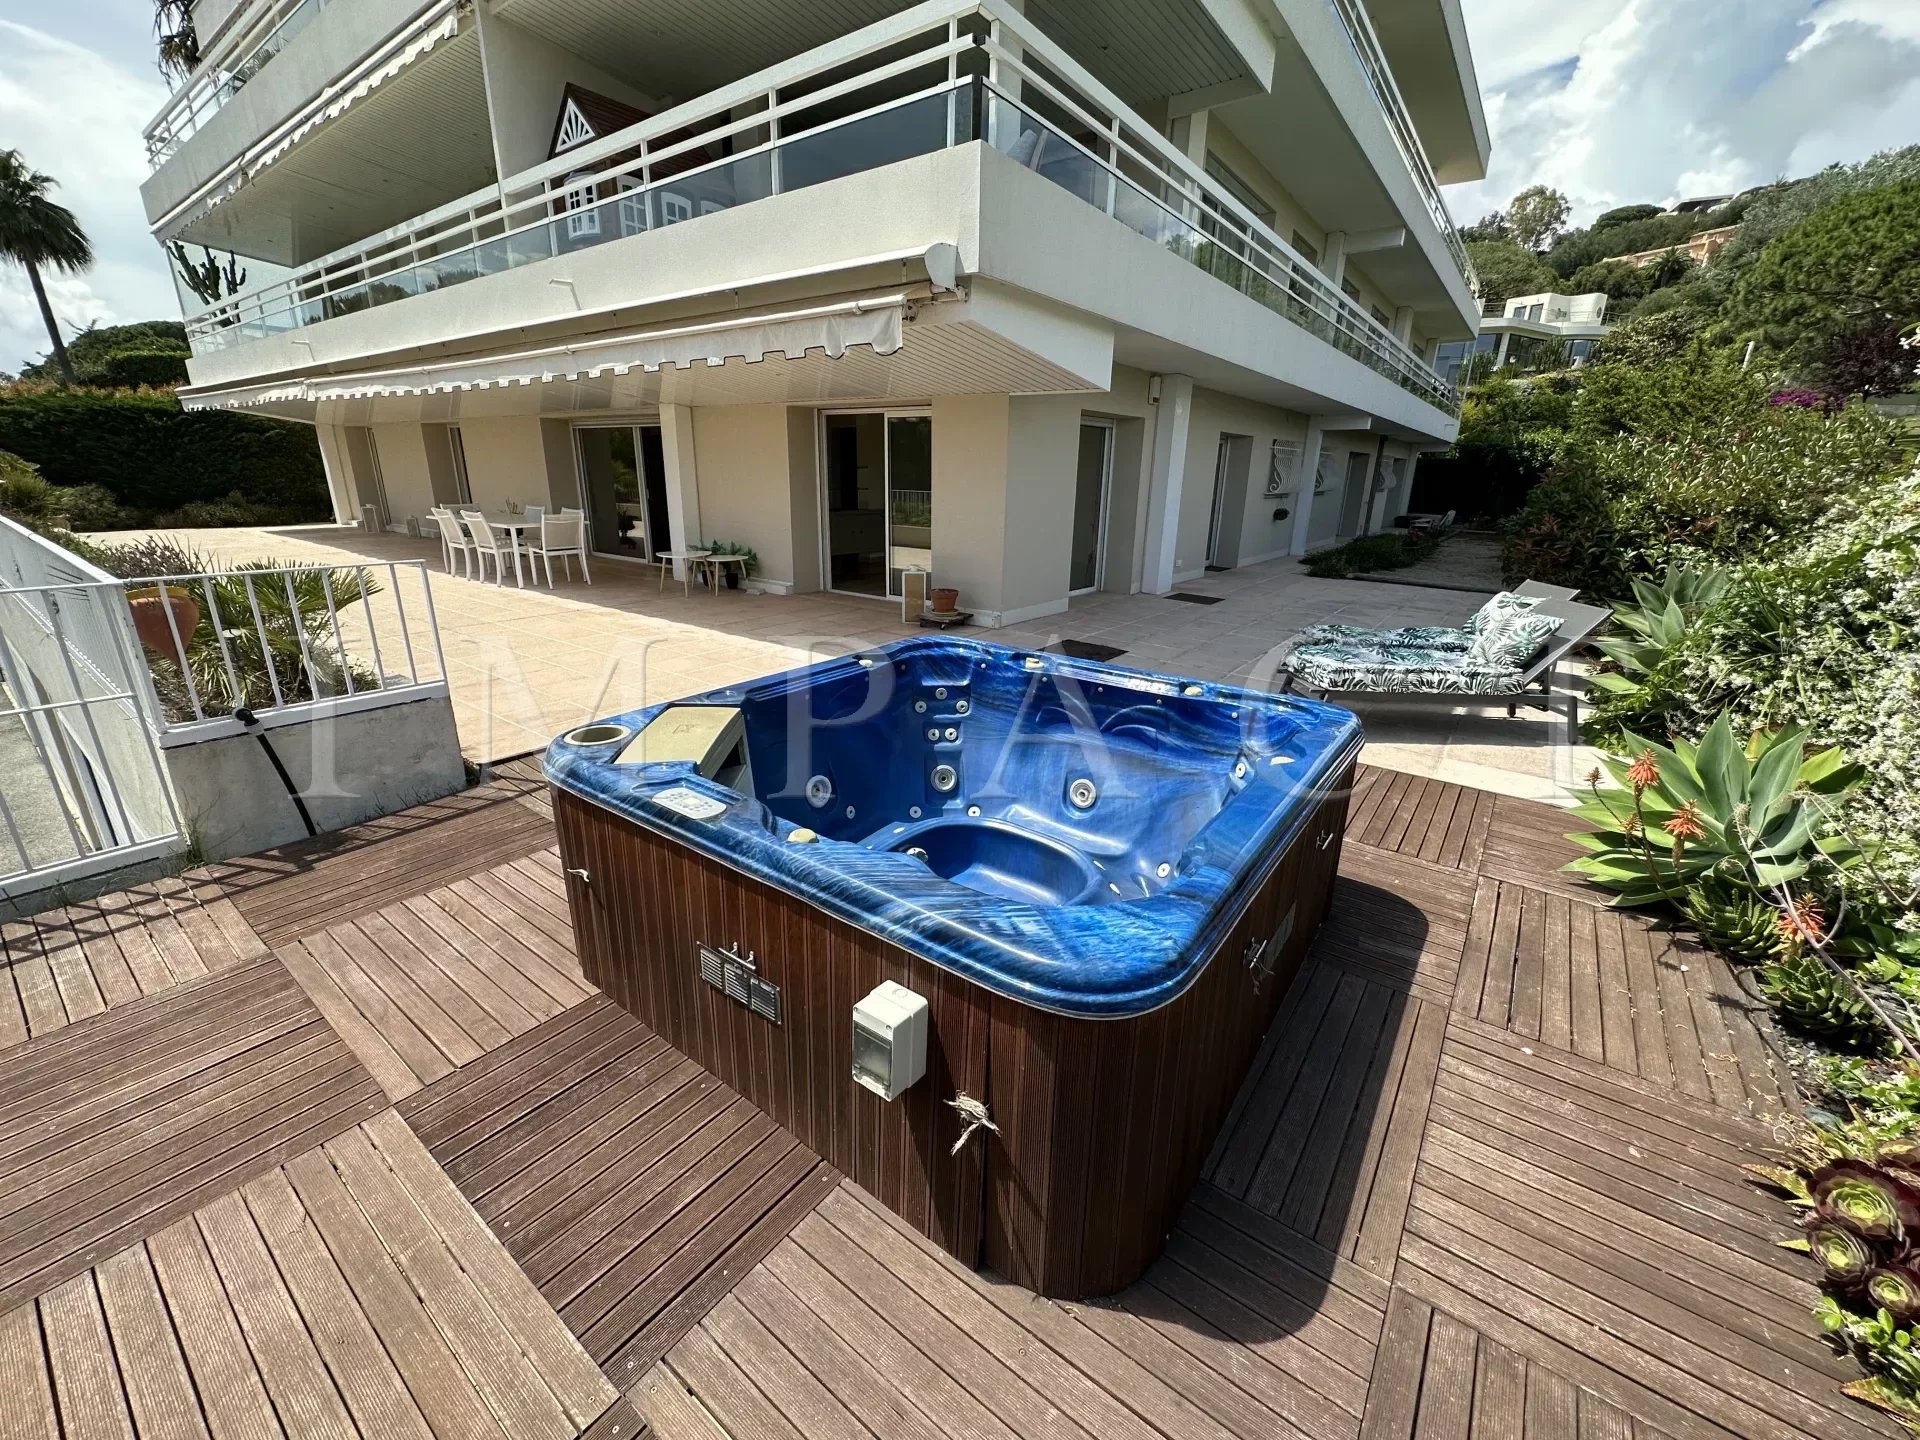 3/4 bedrooms apartment with sea view for sale - Cannes Croix des Gardes